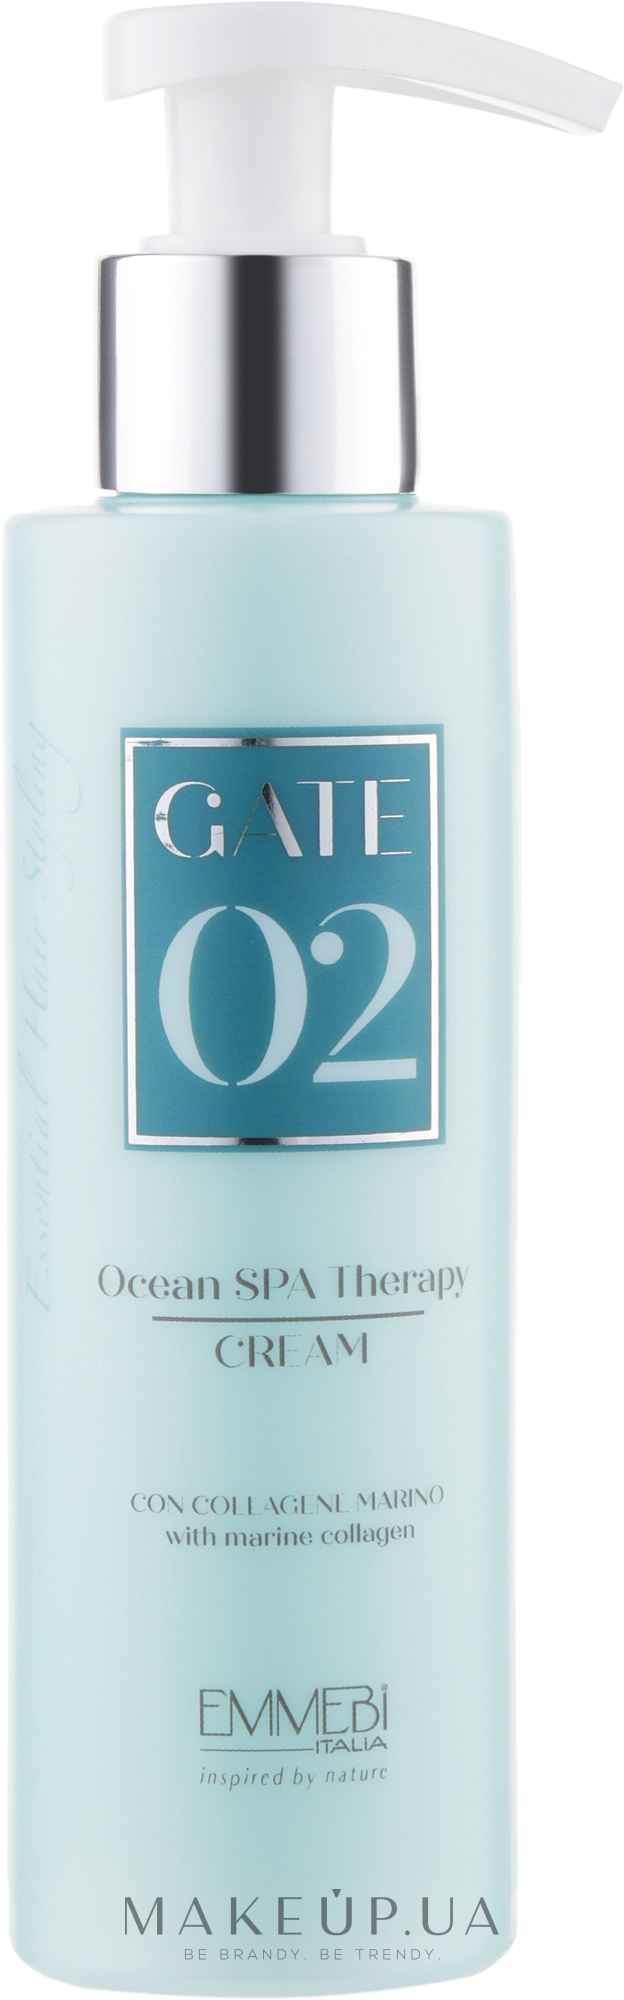 Крем-реконструктор з морським колагеном "СПА-терапія" - Emmebi Italia Gate 02 Ocean Spa Therapy Cream — фото 150ml